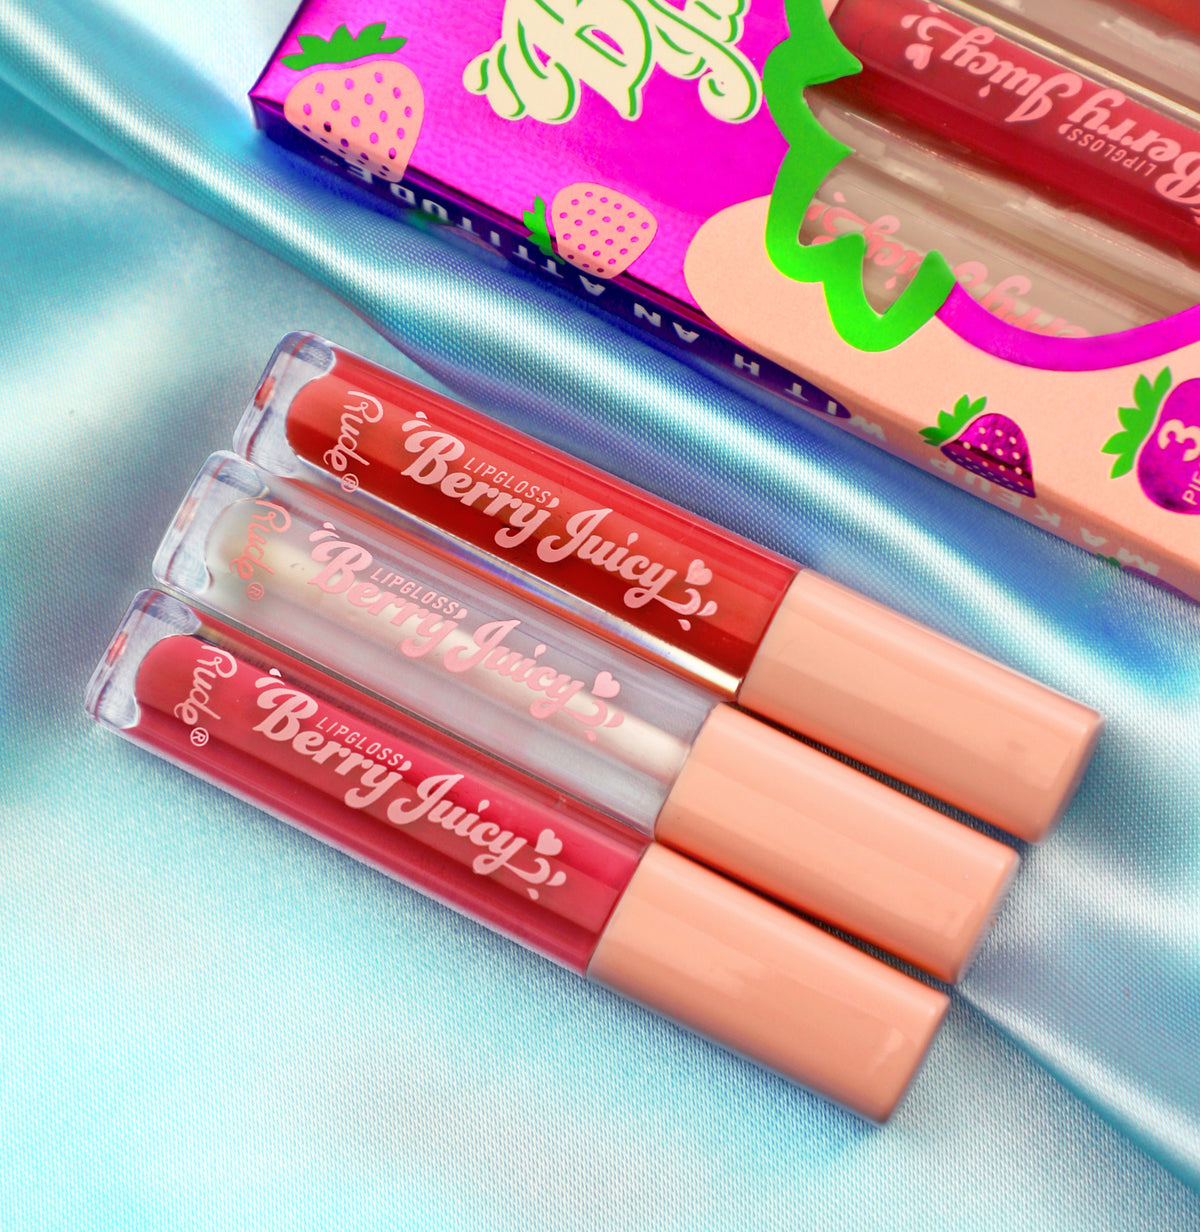 Berry Juicy Lip Gloss Set